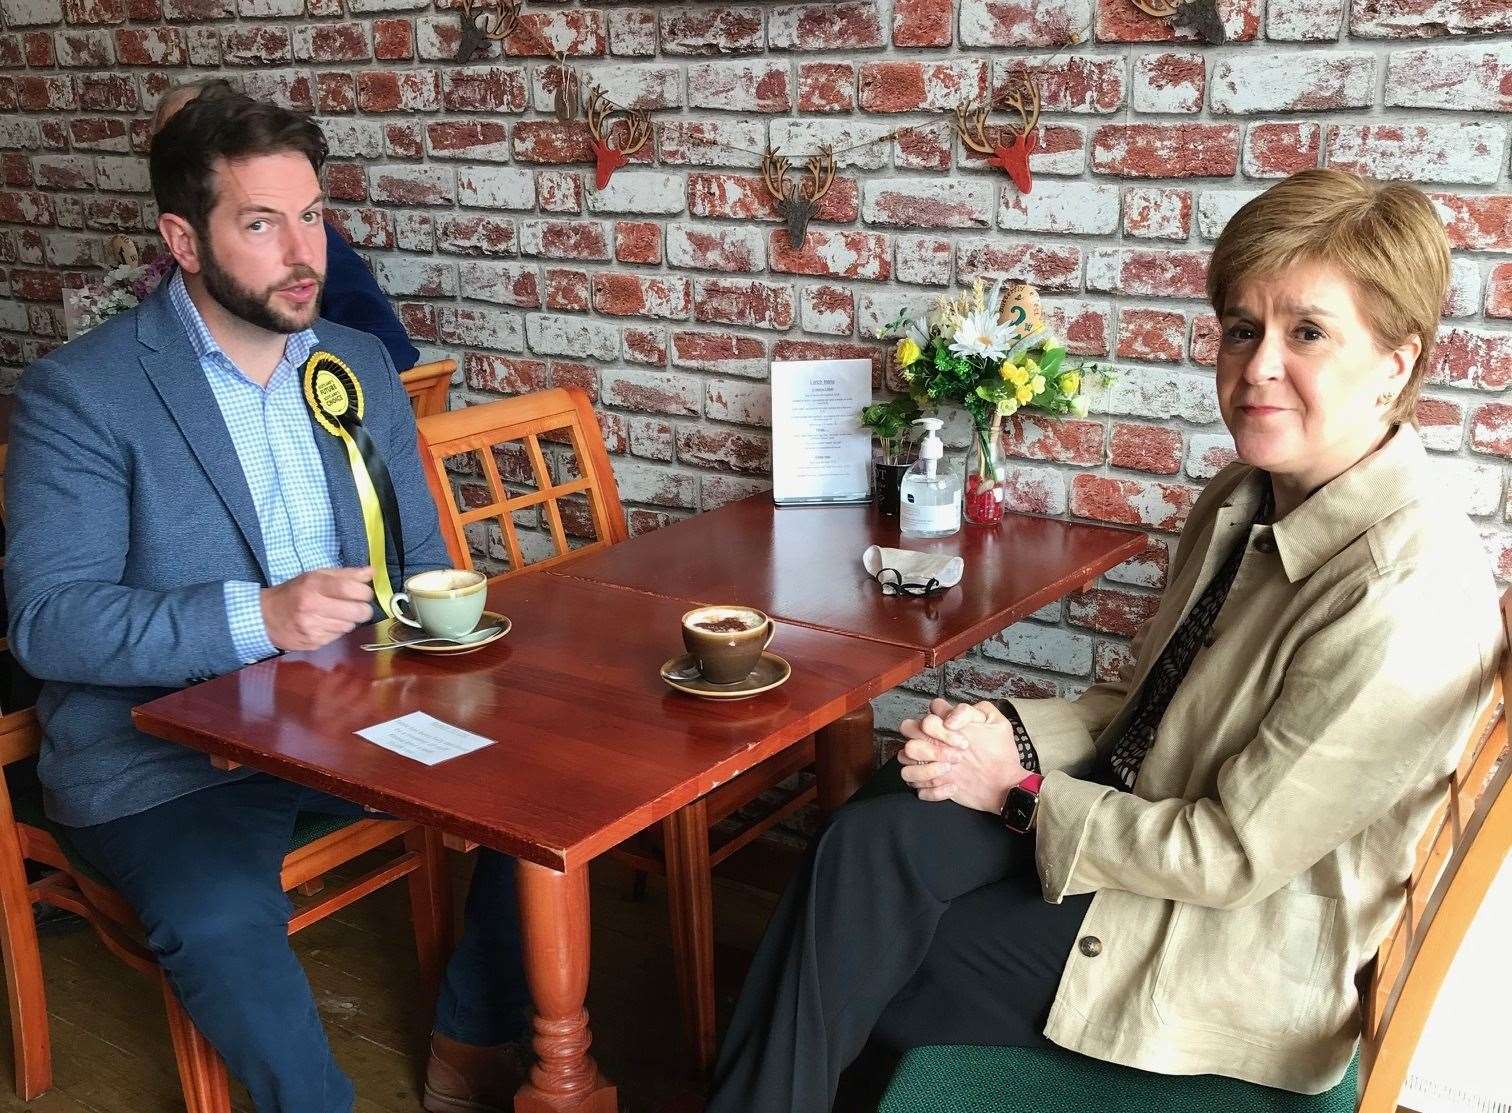 Nicola Sturgeon shares campaign tactics with Aberdeenshire West candidate Fergus Mutch.